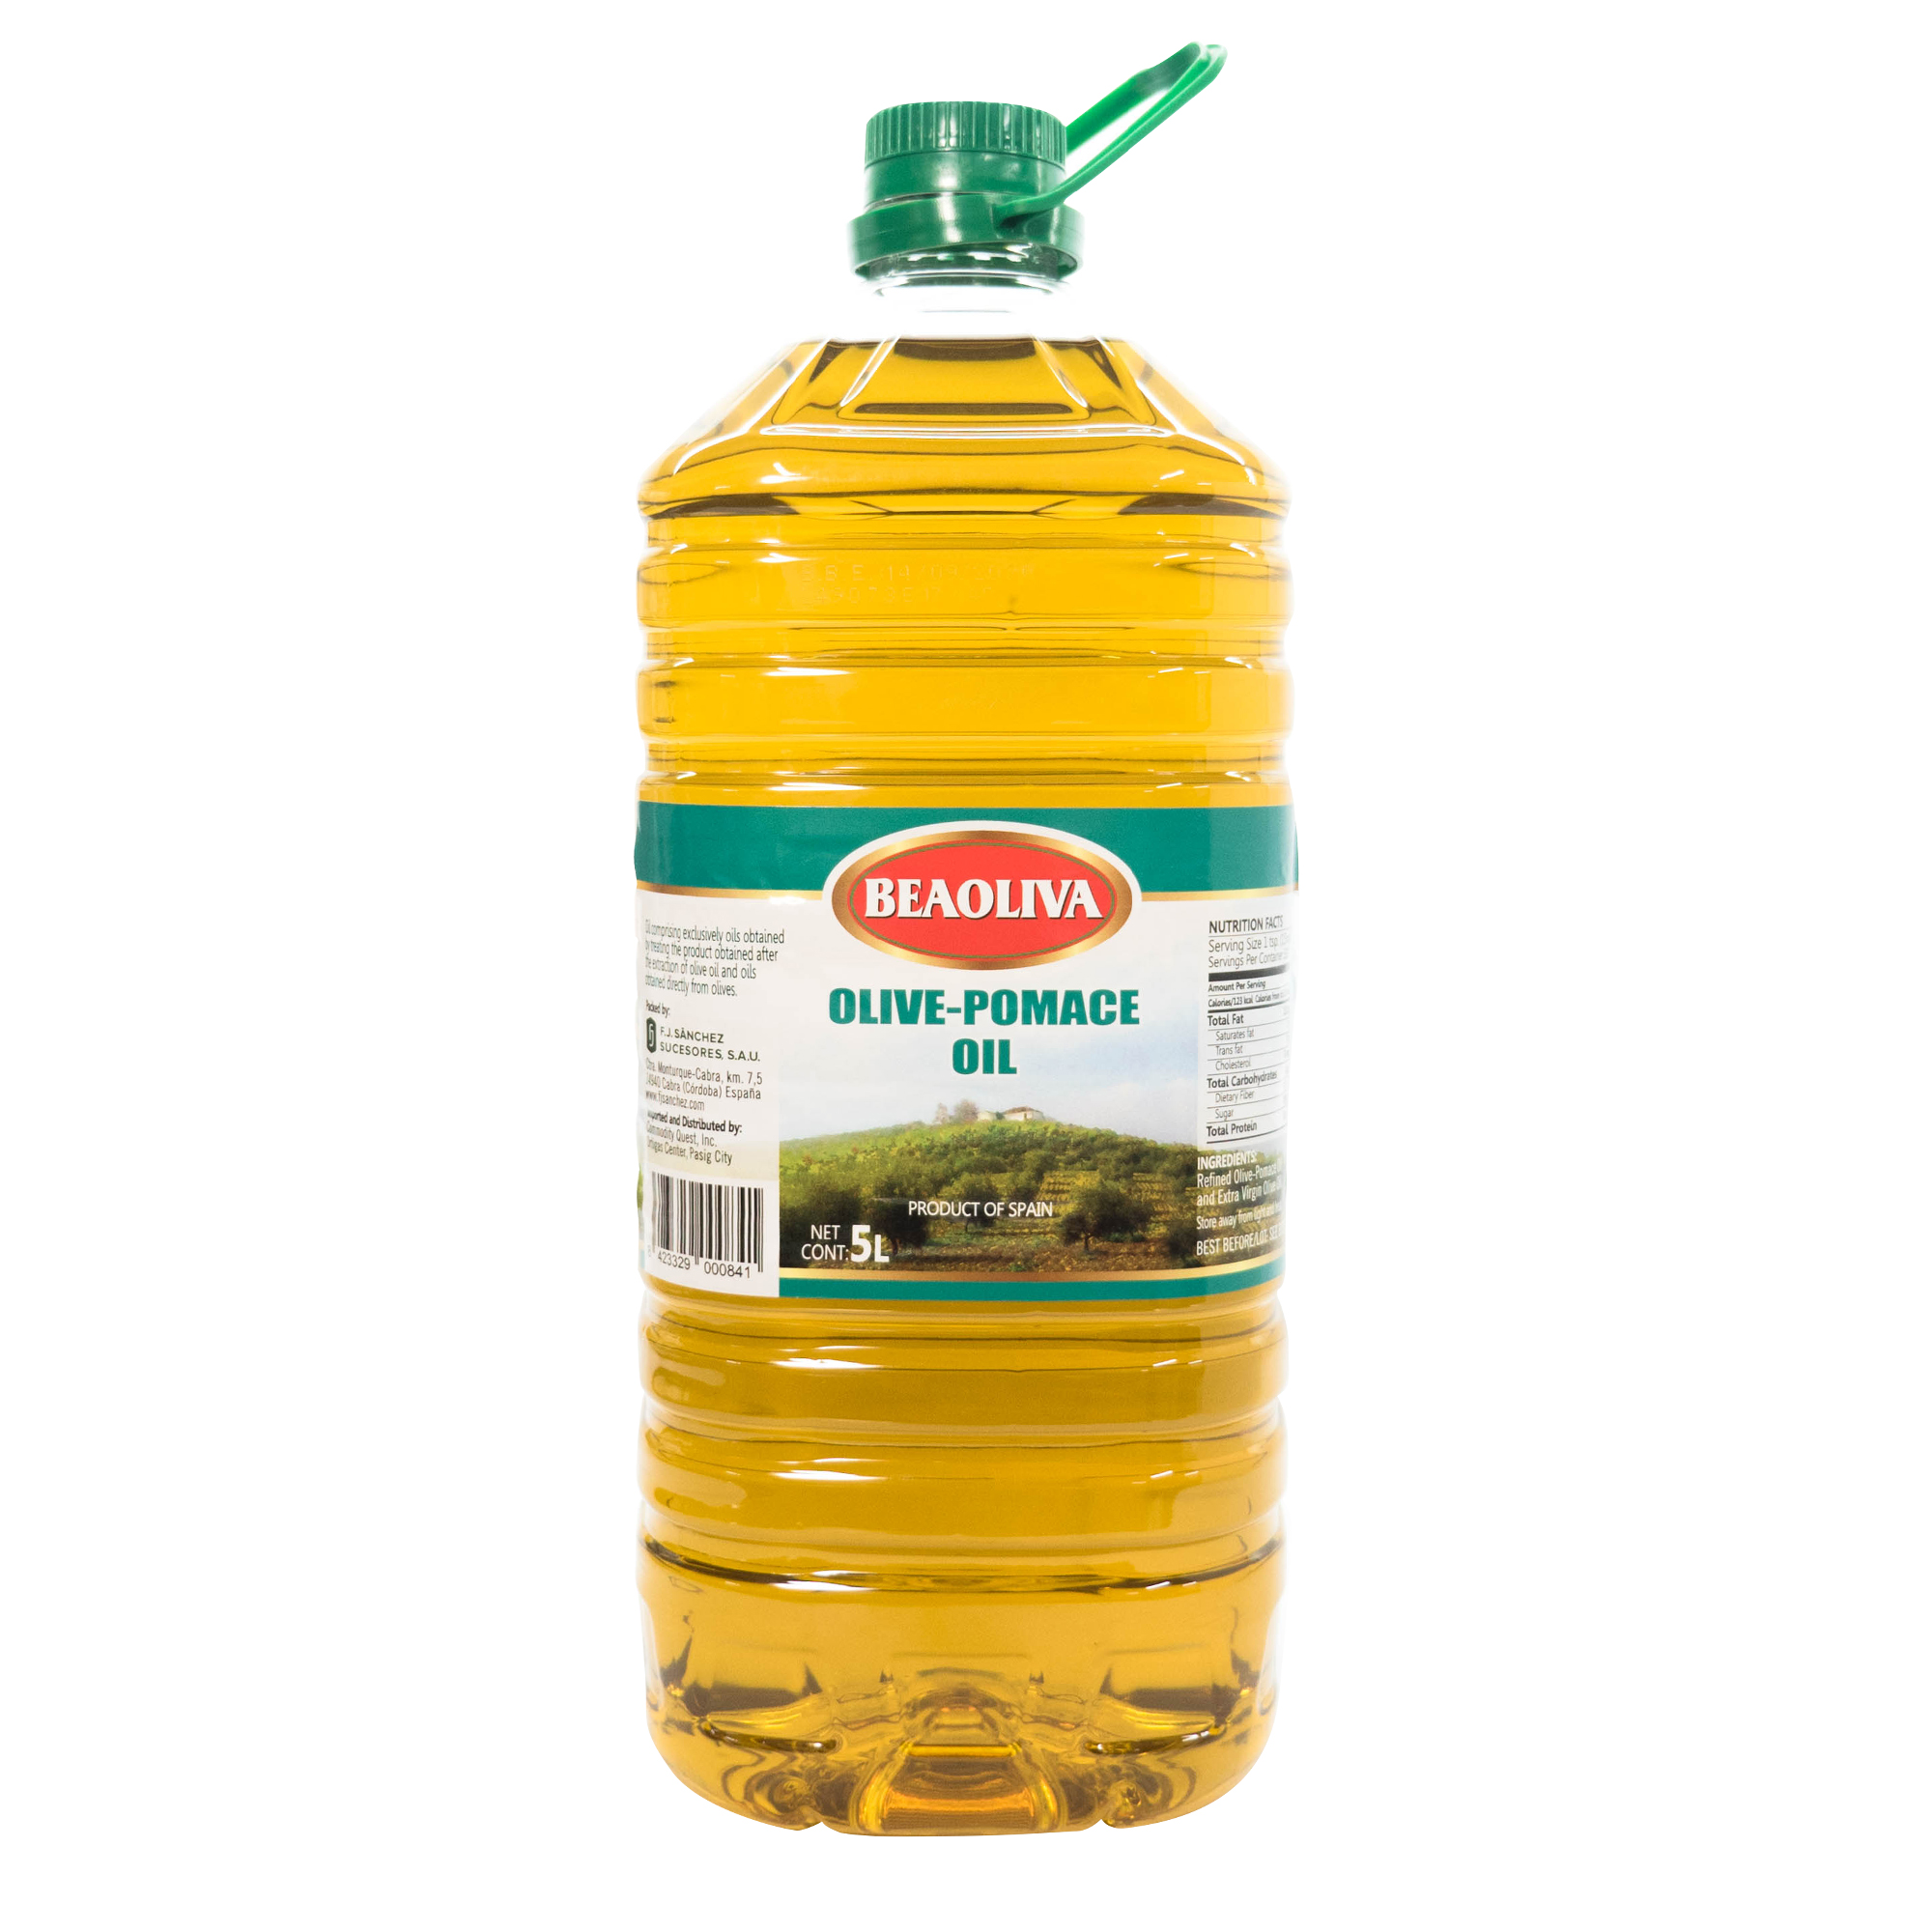 Oro Espanol Pomace Olive Oil. Feudo Verde Pomace масло. Оливковое масло в бочке. Pomace Oil Aurelia.